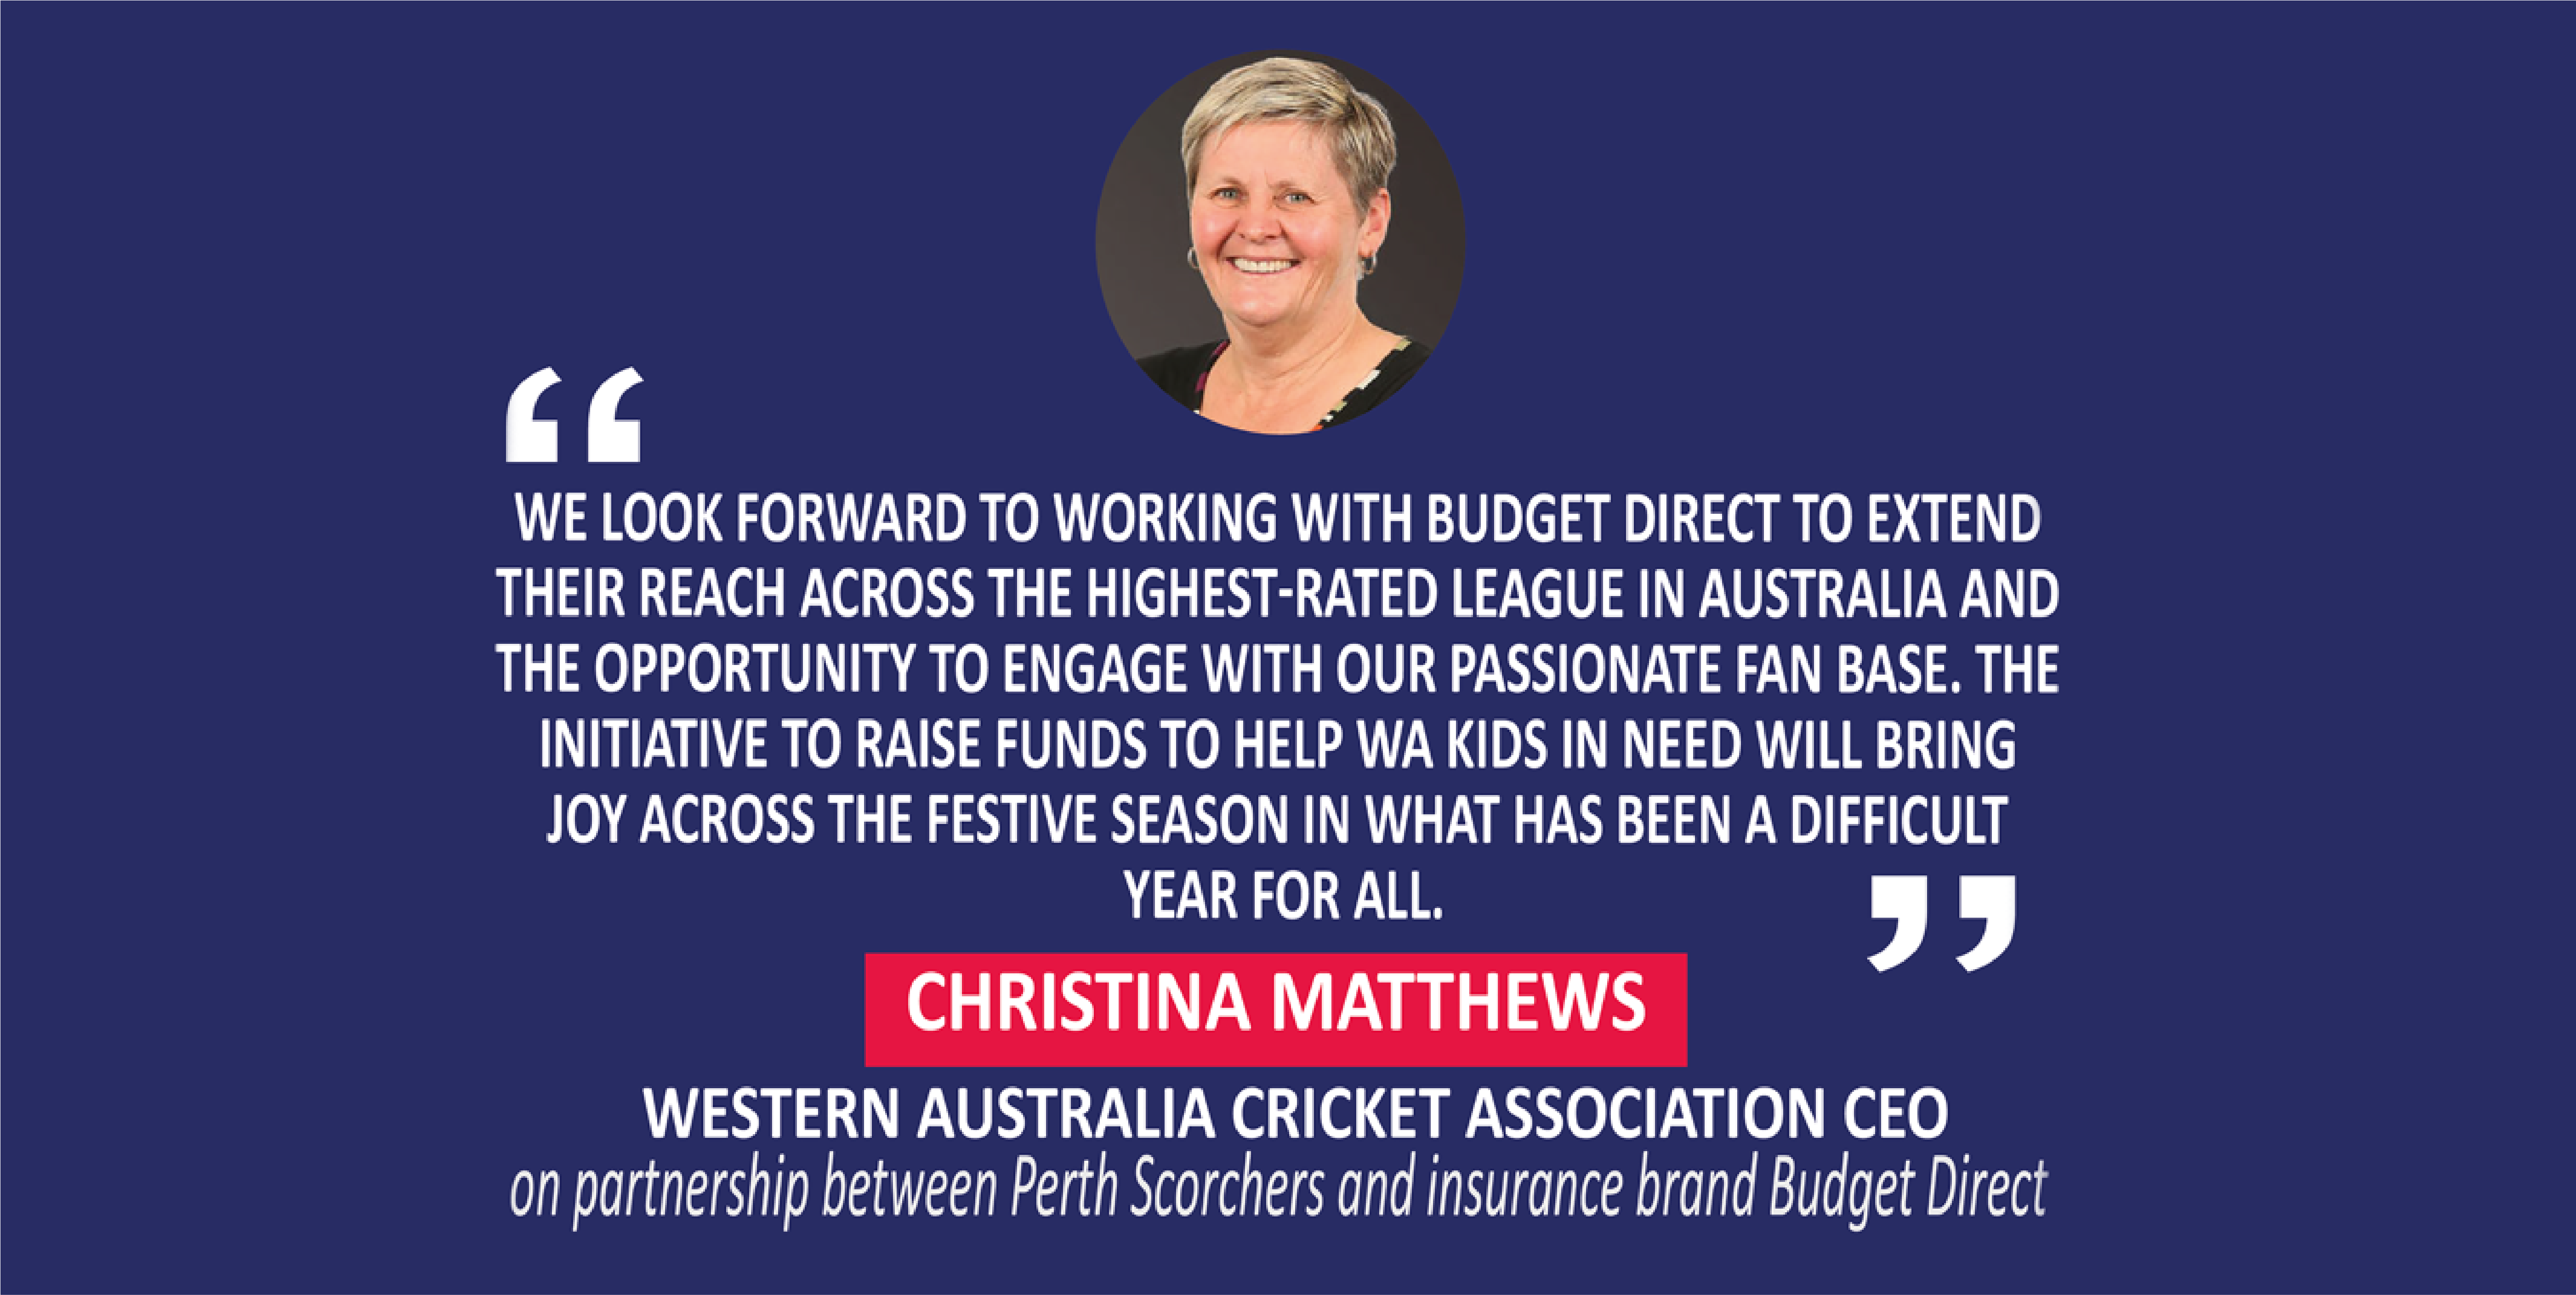 Christina Matthews, Western Australia Cricket Association CEO on partnership between Perth Scorchers and insurance brand Budget Direct